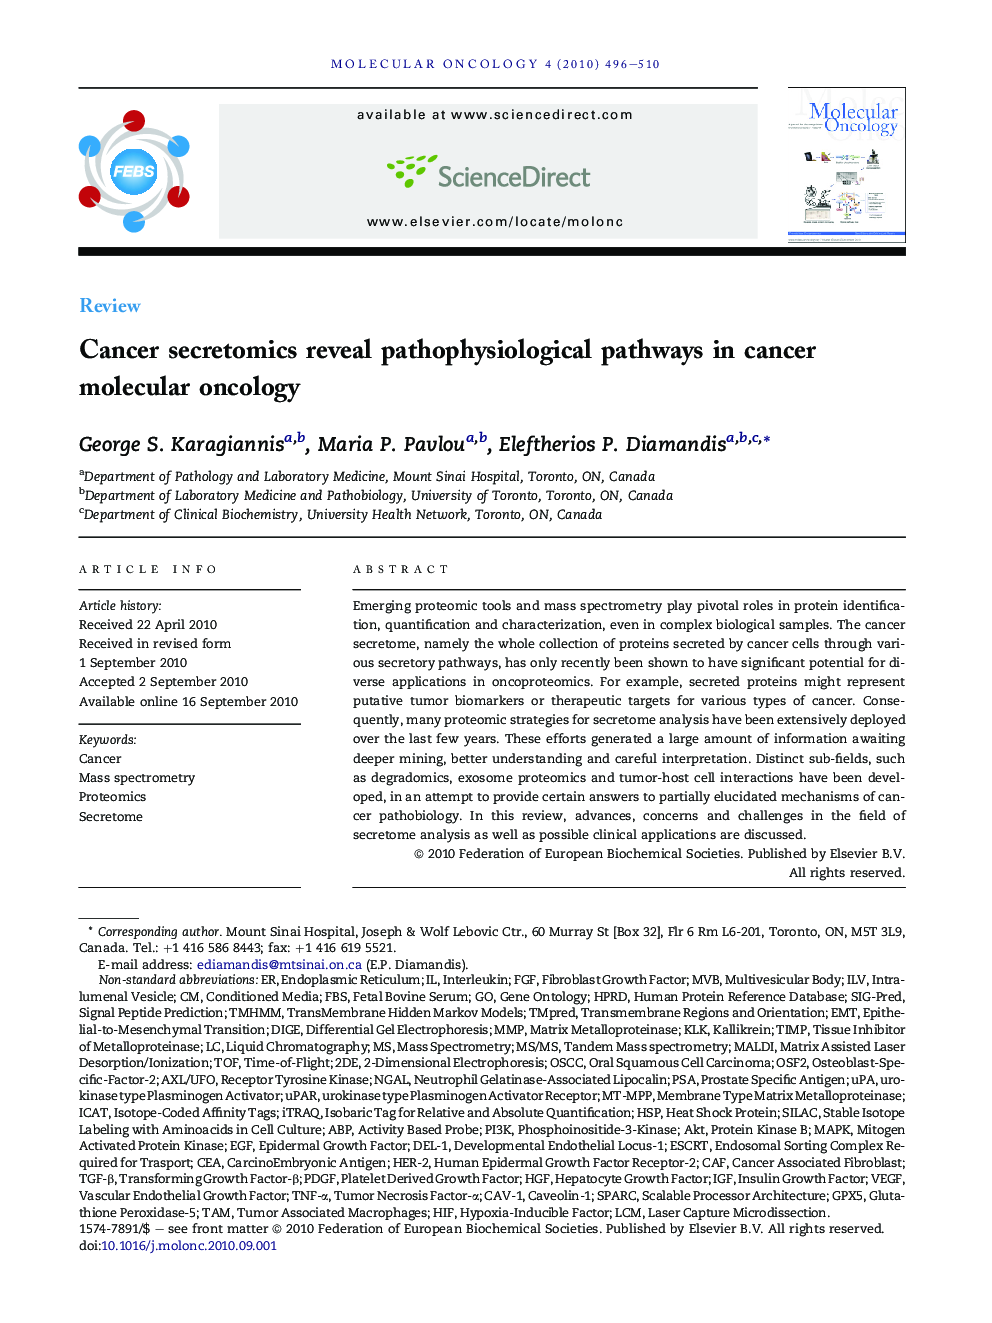 Cancer secretomics reveal pathophysiological pathways in cancer molecular oncology